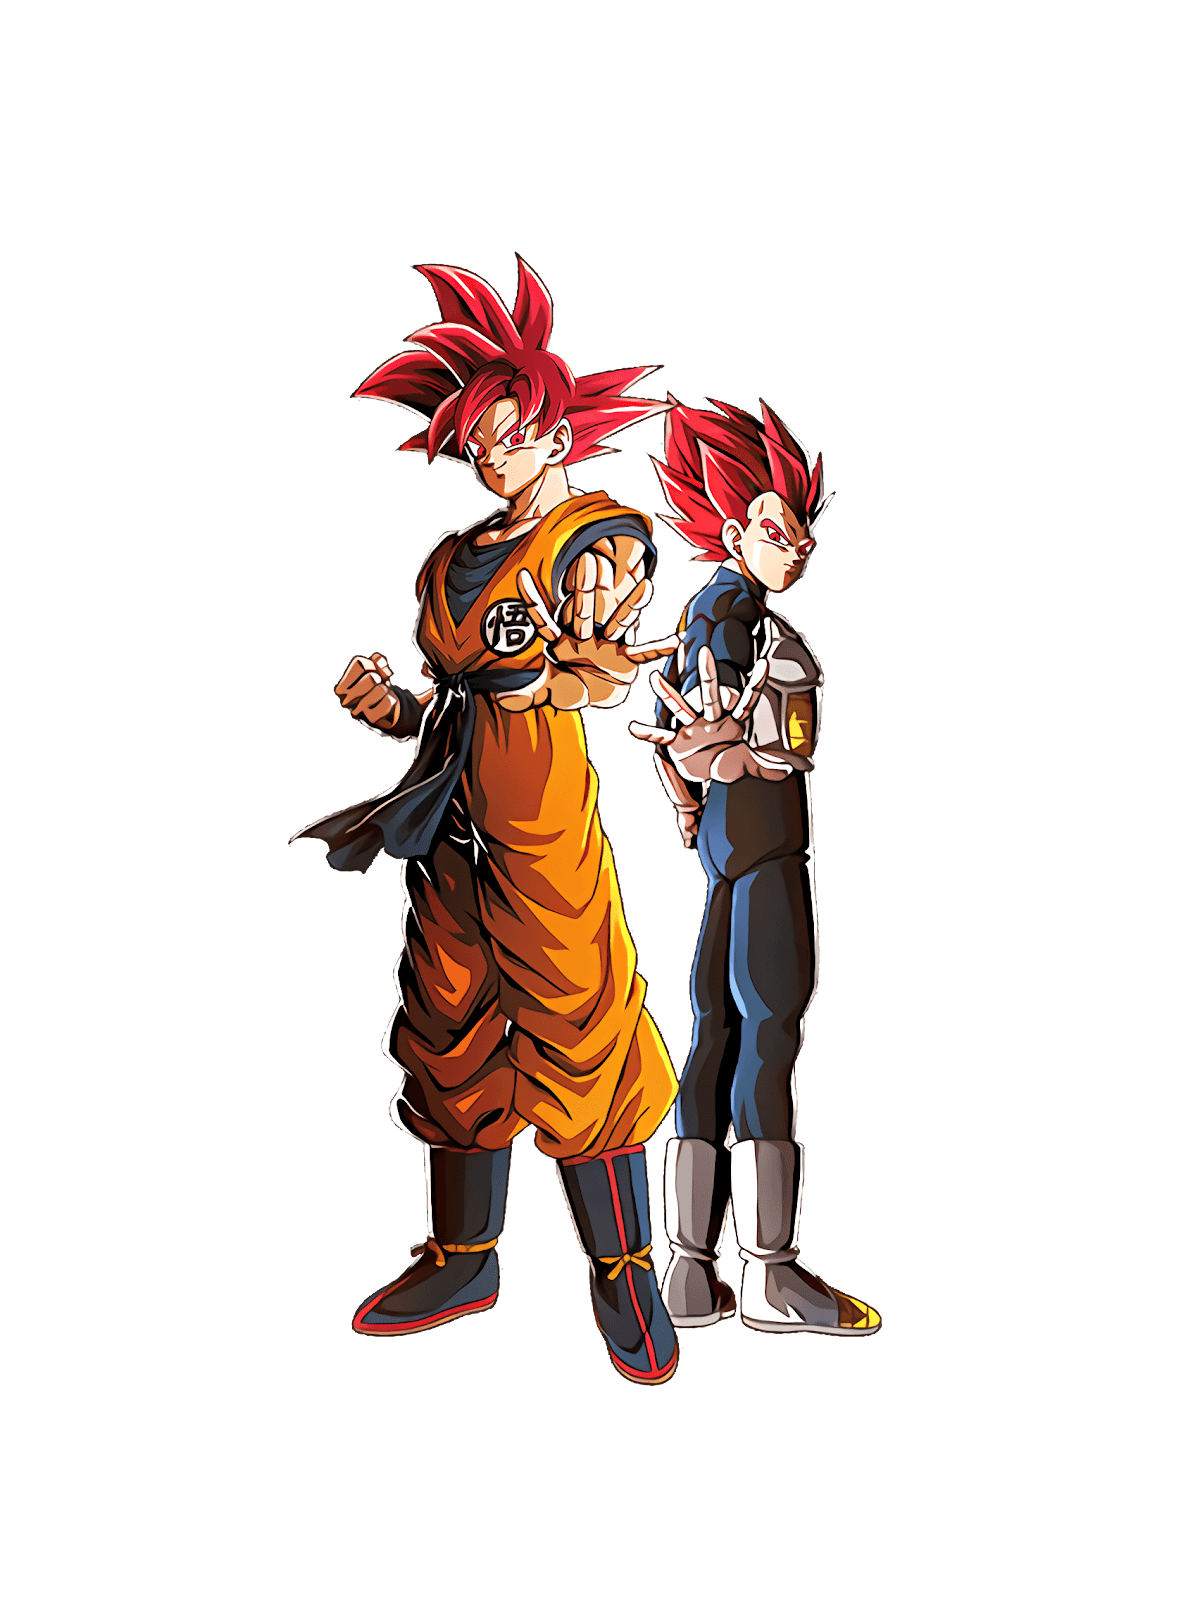 John on Twitter: "LR [Infinite Power God Warriors] Super Saiyan God Goku  &amp; Super Saiyan God Vegeta HQ Art + Transparent Character Art  #DBZDokkanBattle #DokkanBattle https://t.co/DodiEPLuLi" / Twitter